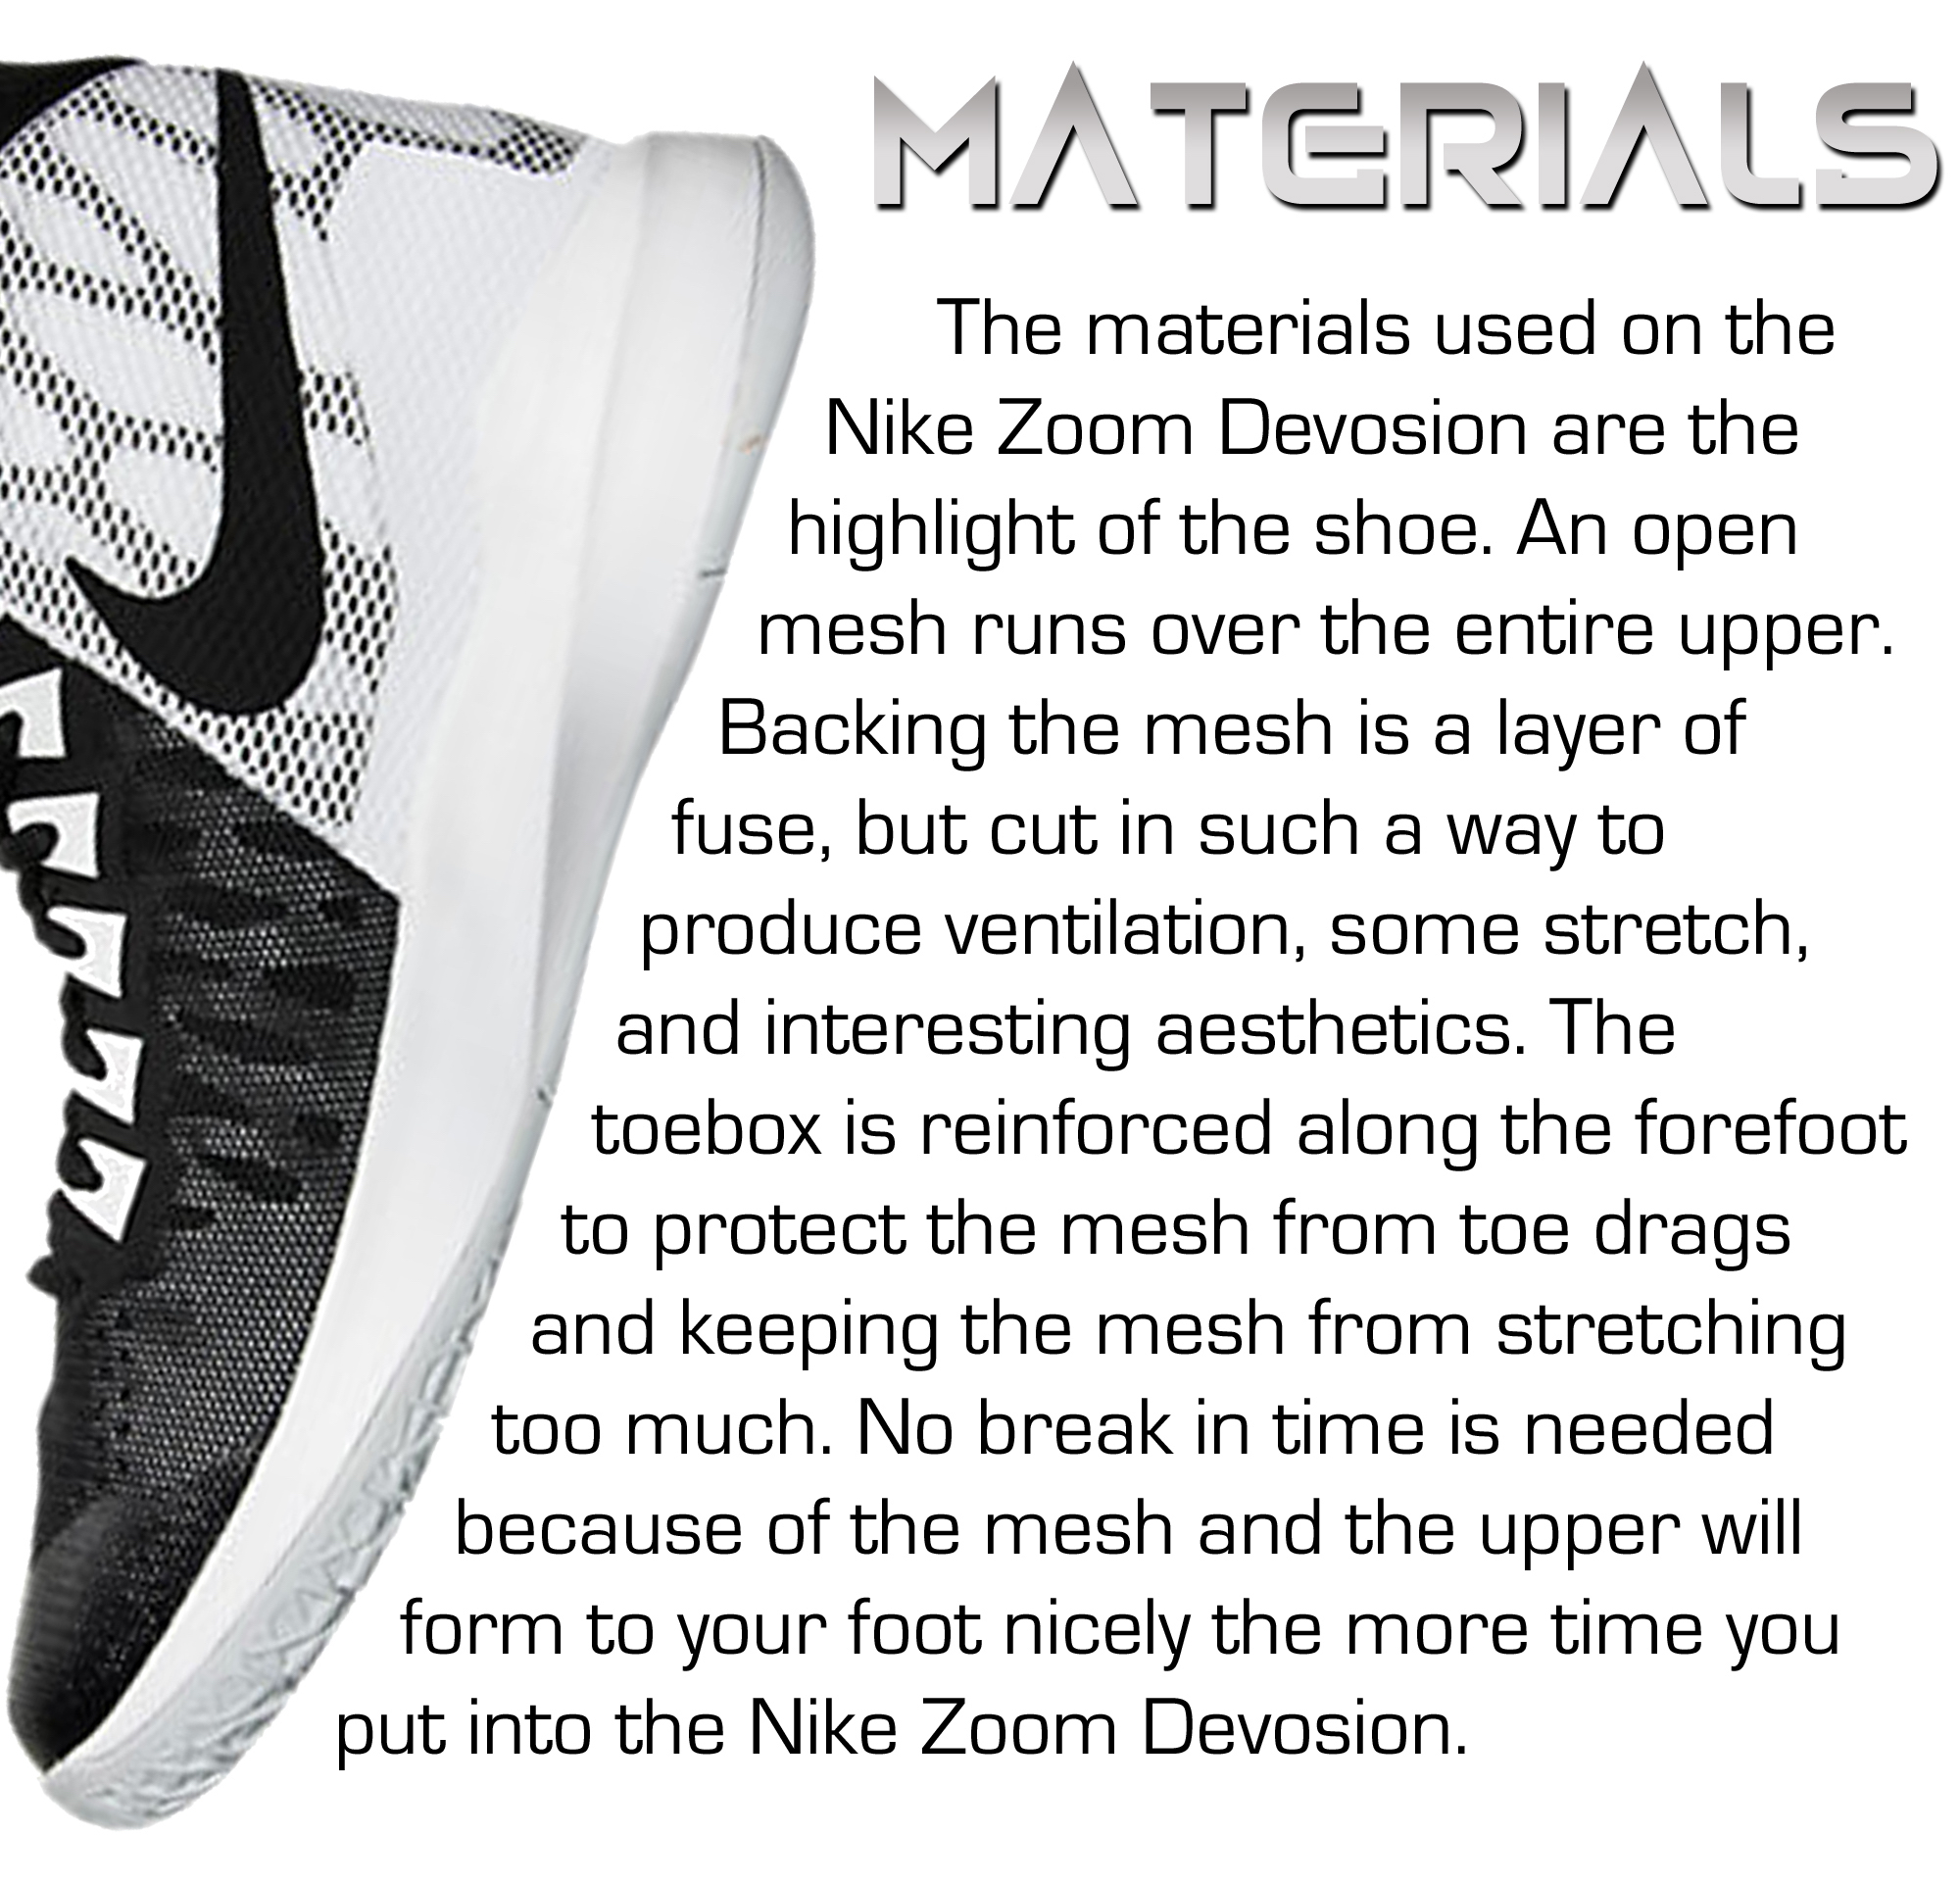 Nike Devosion - Materials